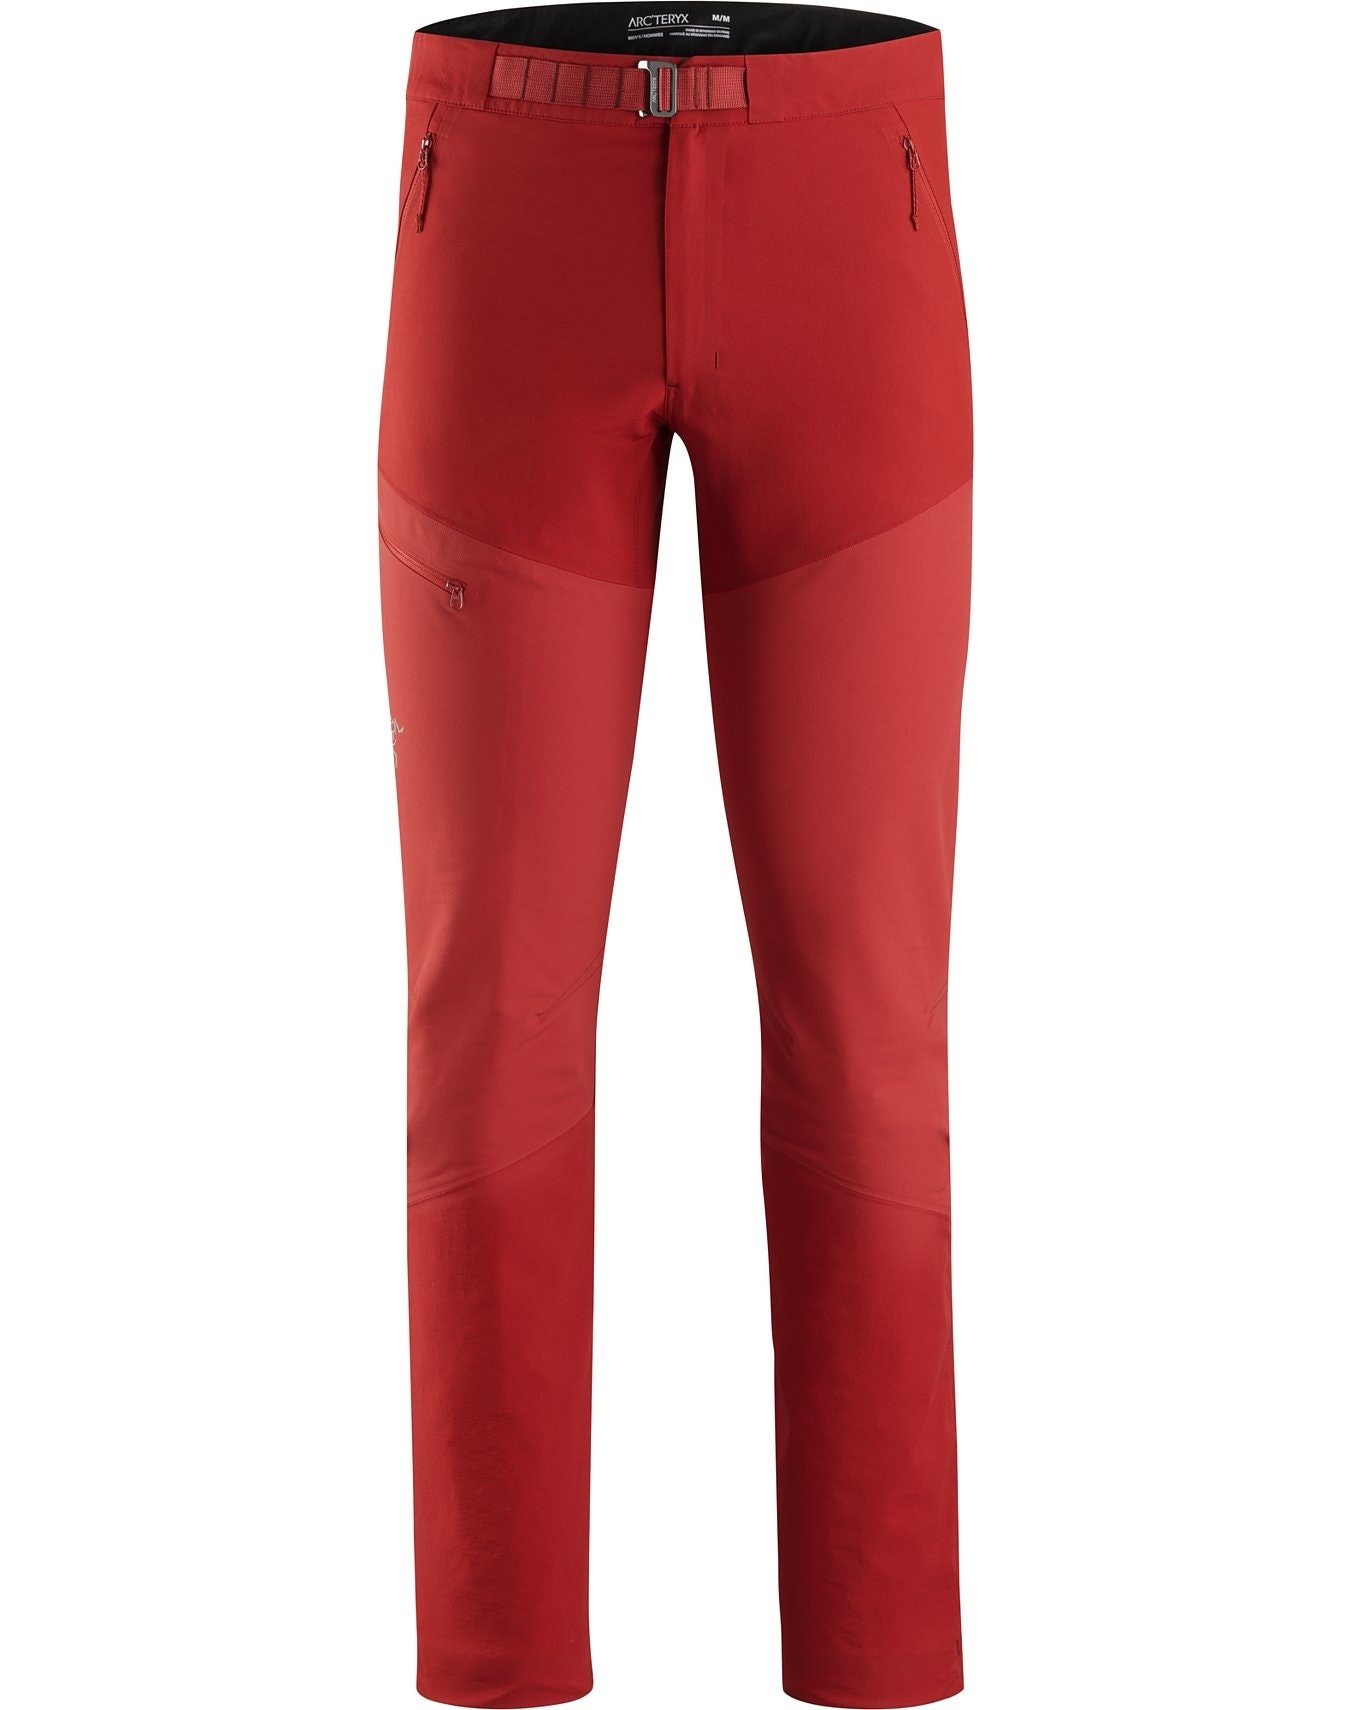 ArcTeryx Sigma FL Pants Men's Infrared-0